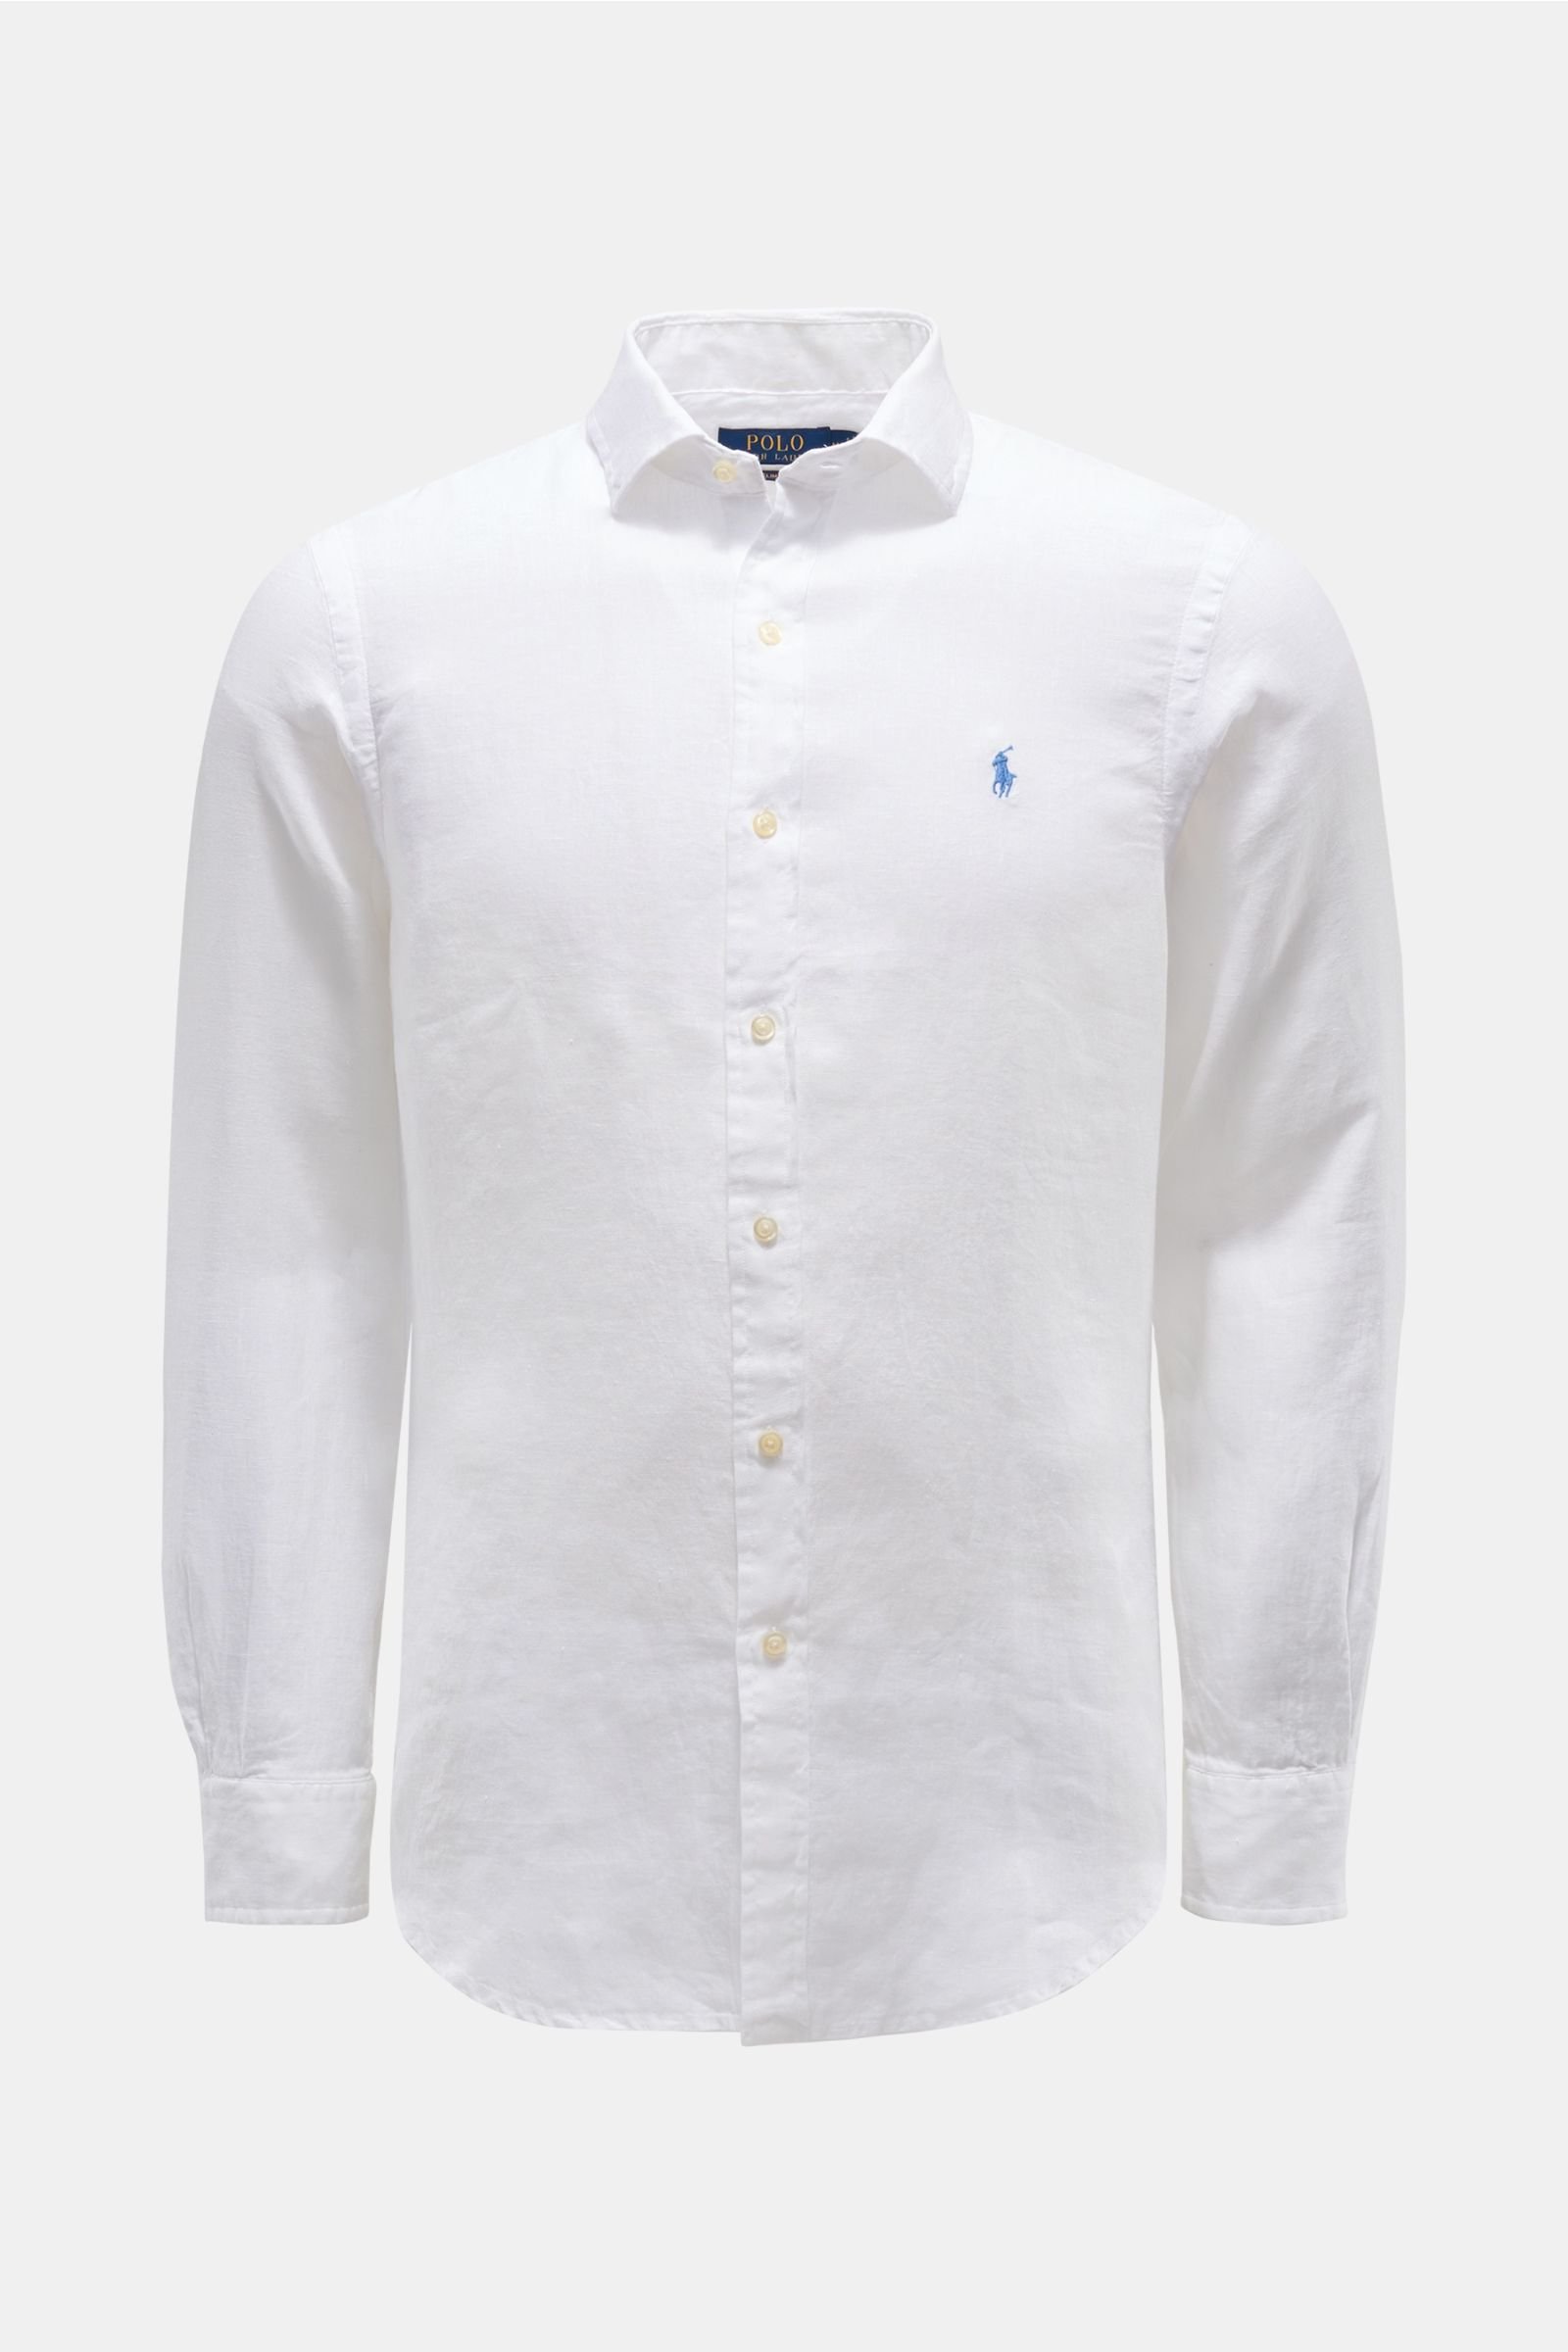 POLO RALPH LAUREN linen shirt slim collar white | BRAUN Hamburg